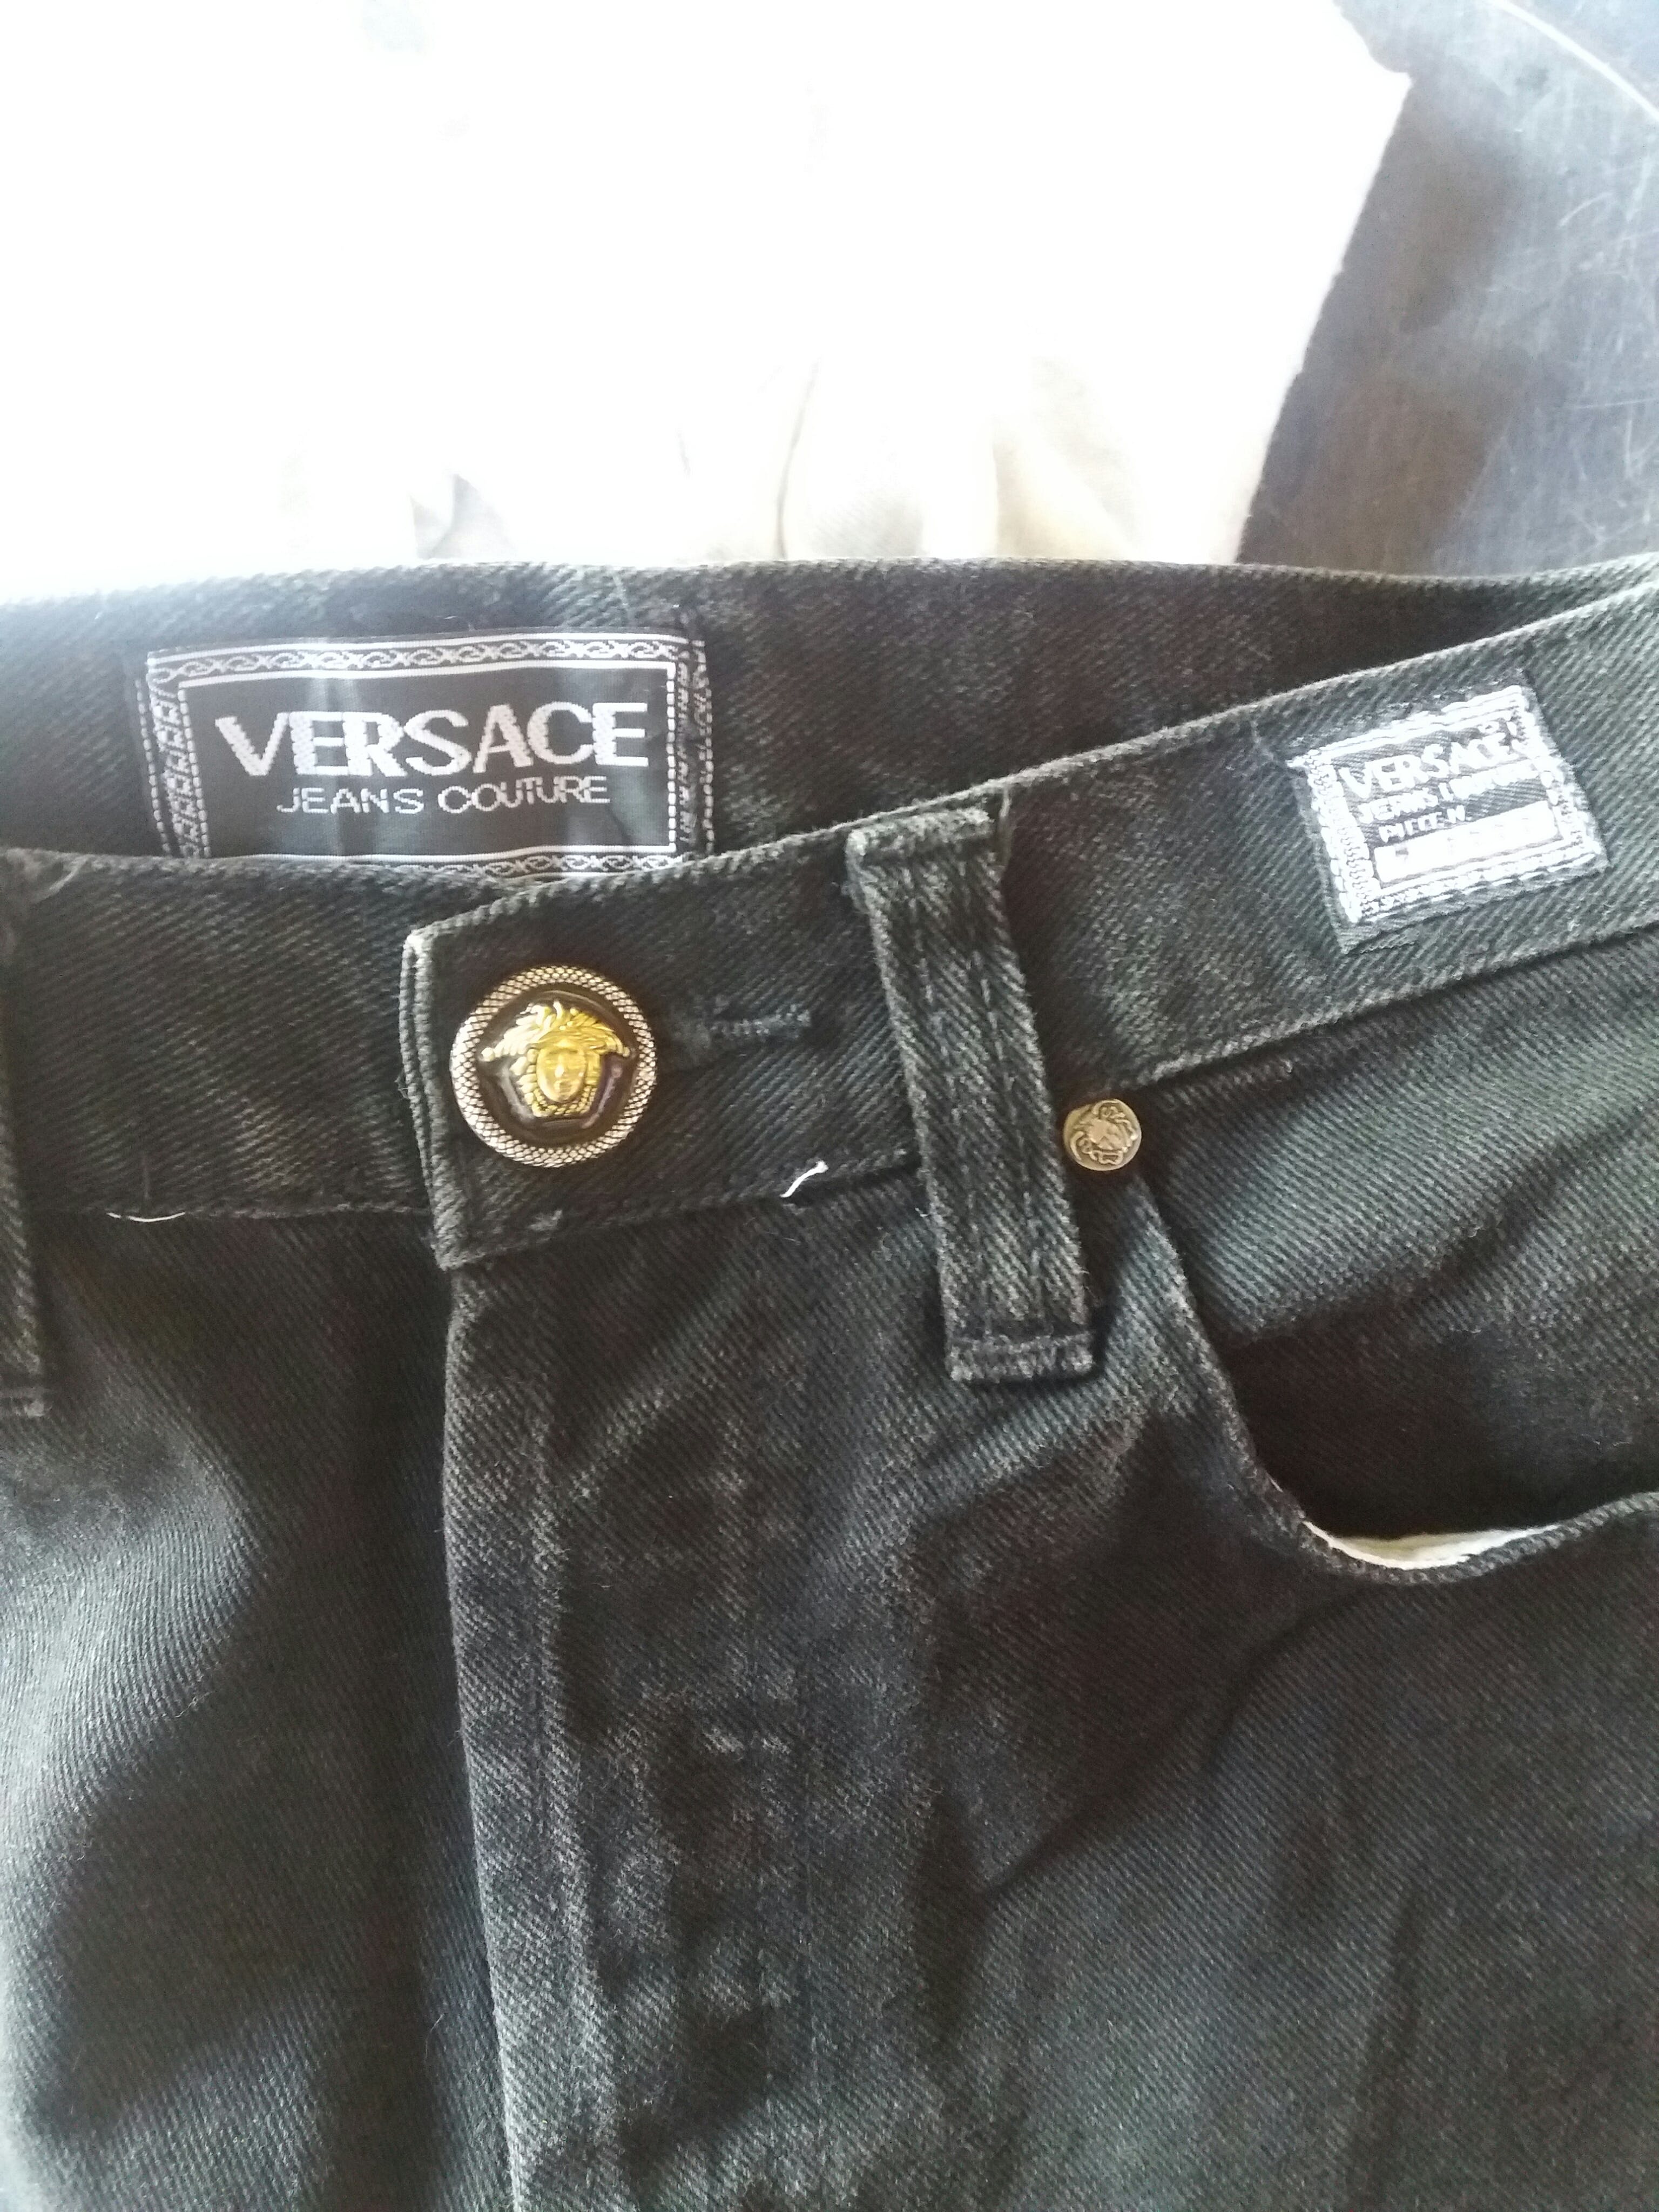 Versace jeans couture denim jeans - 7